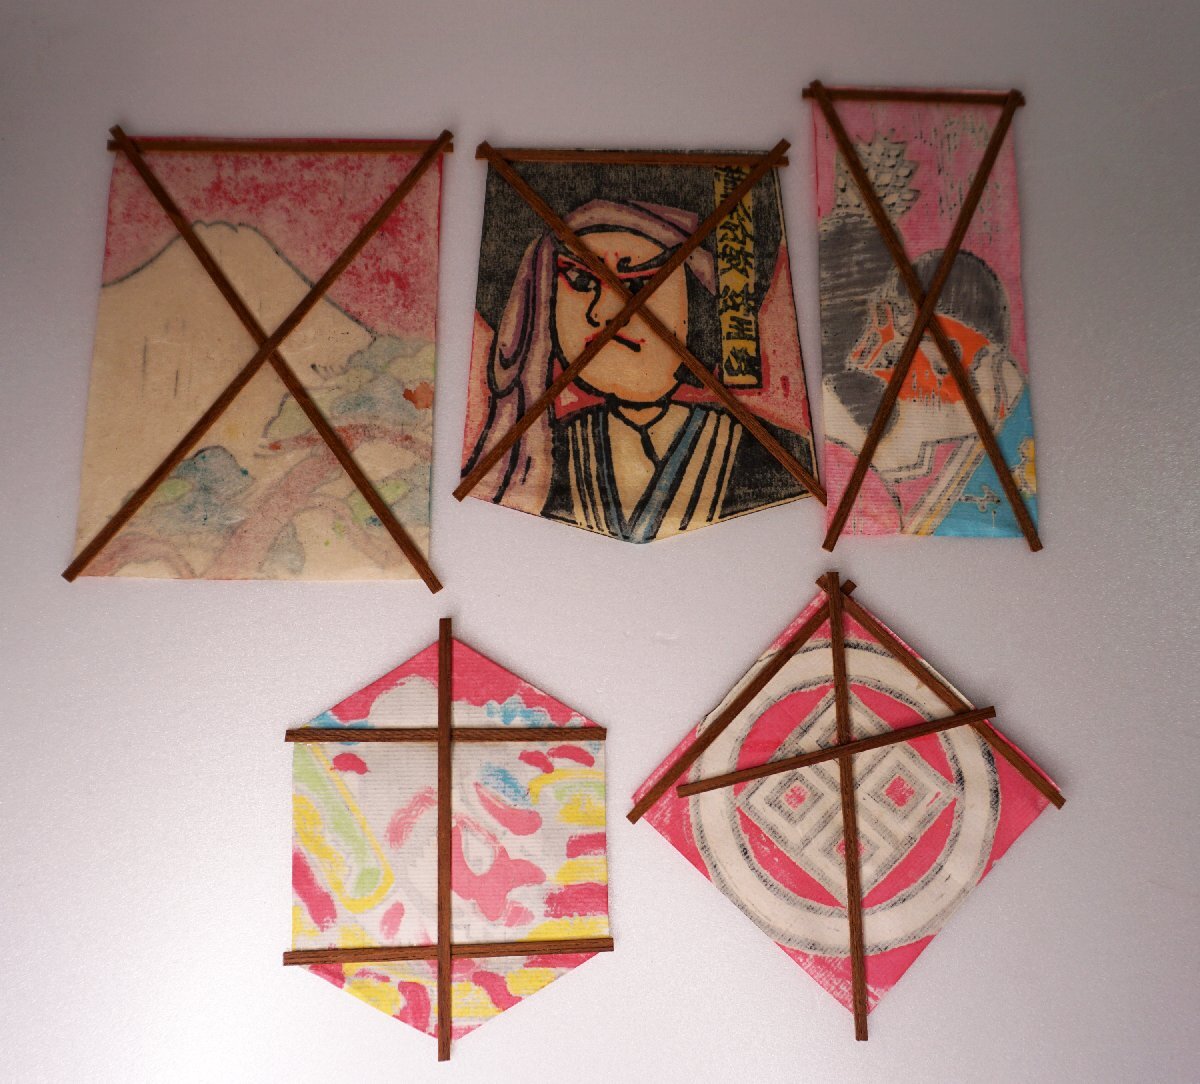  Mini kite 5 sheets 1 collection 